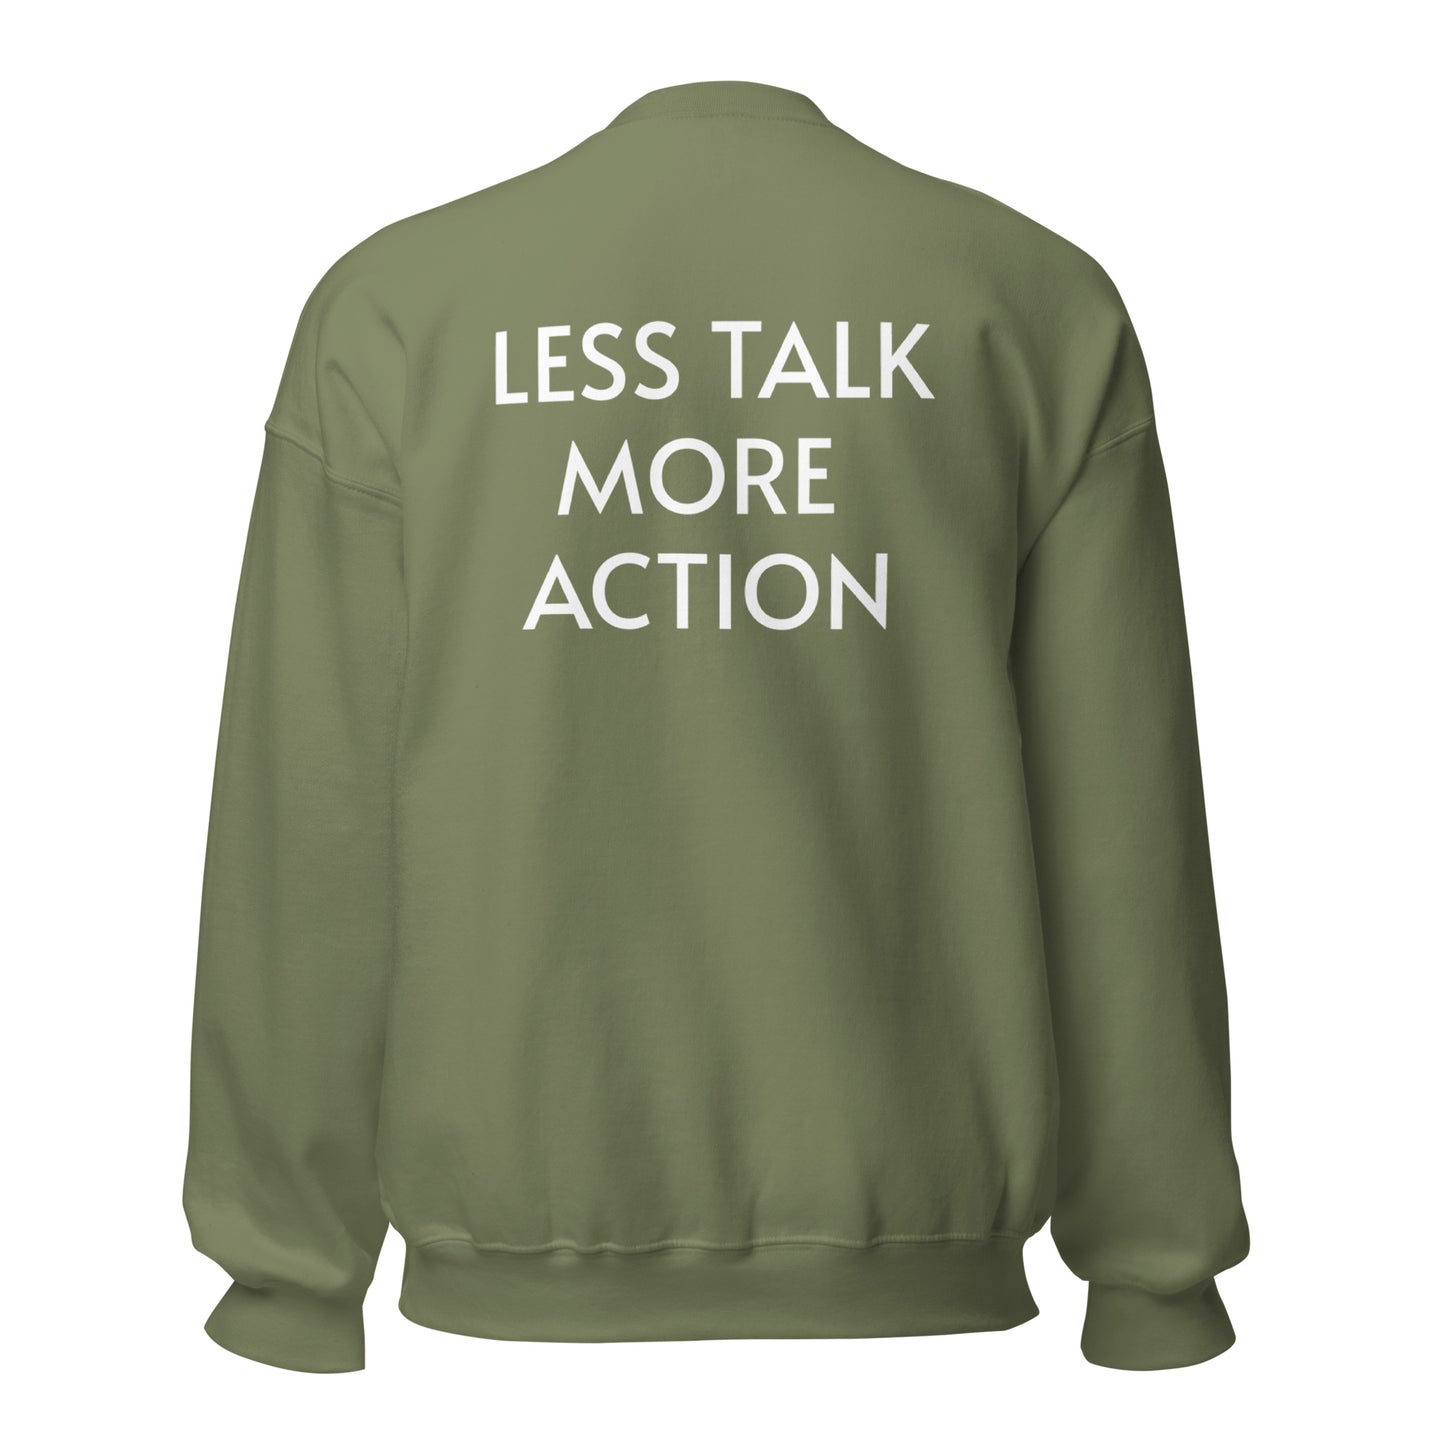 Less Talk More Action Sweatshirt